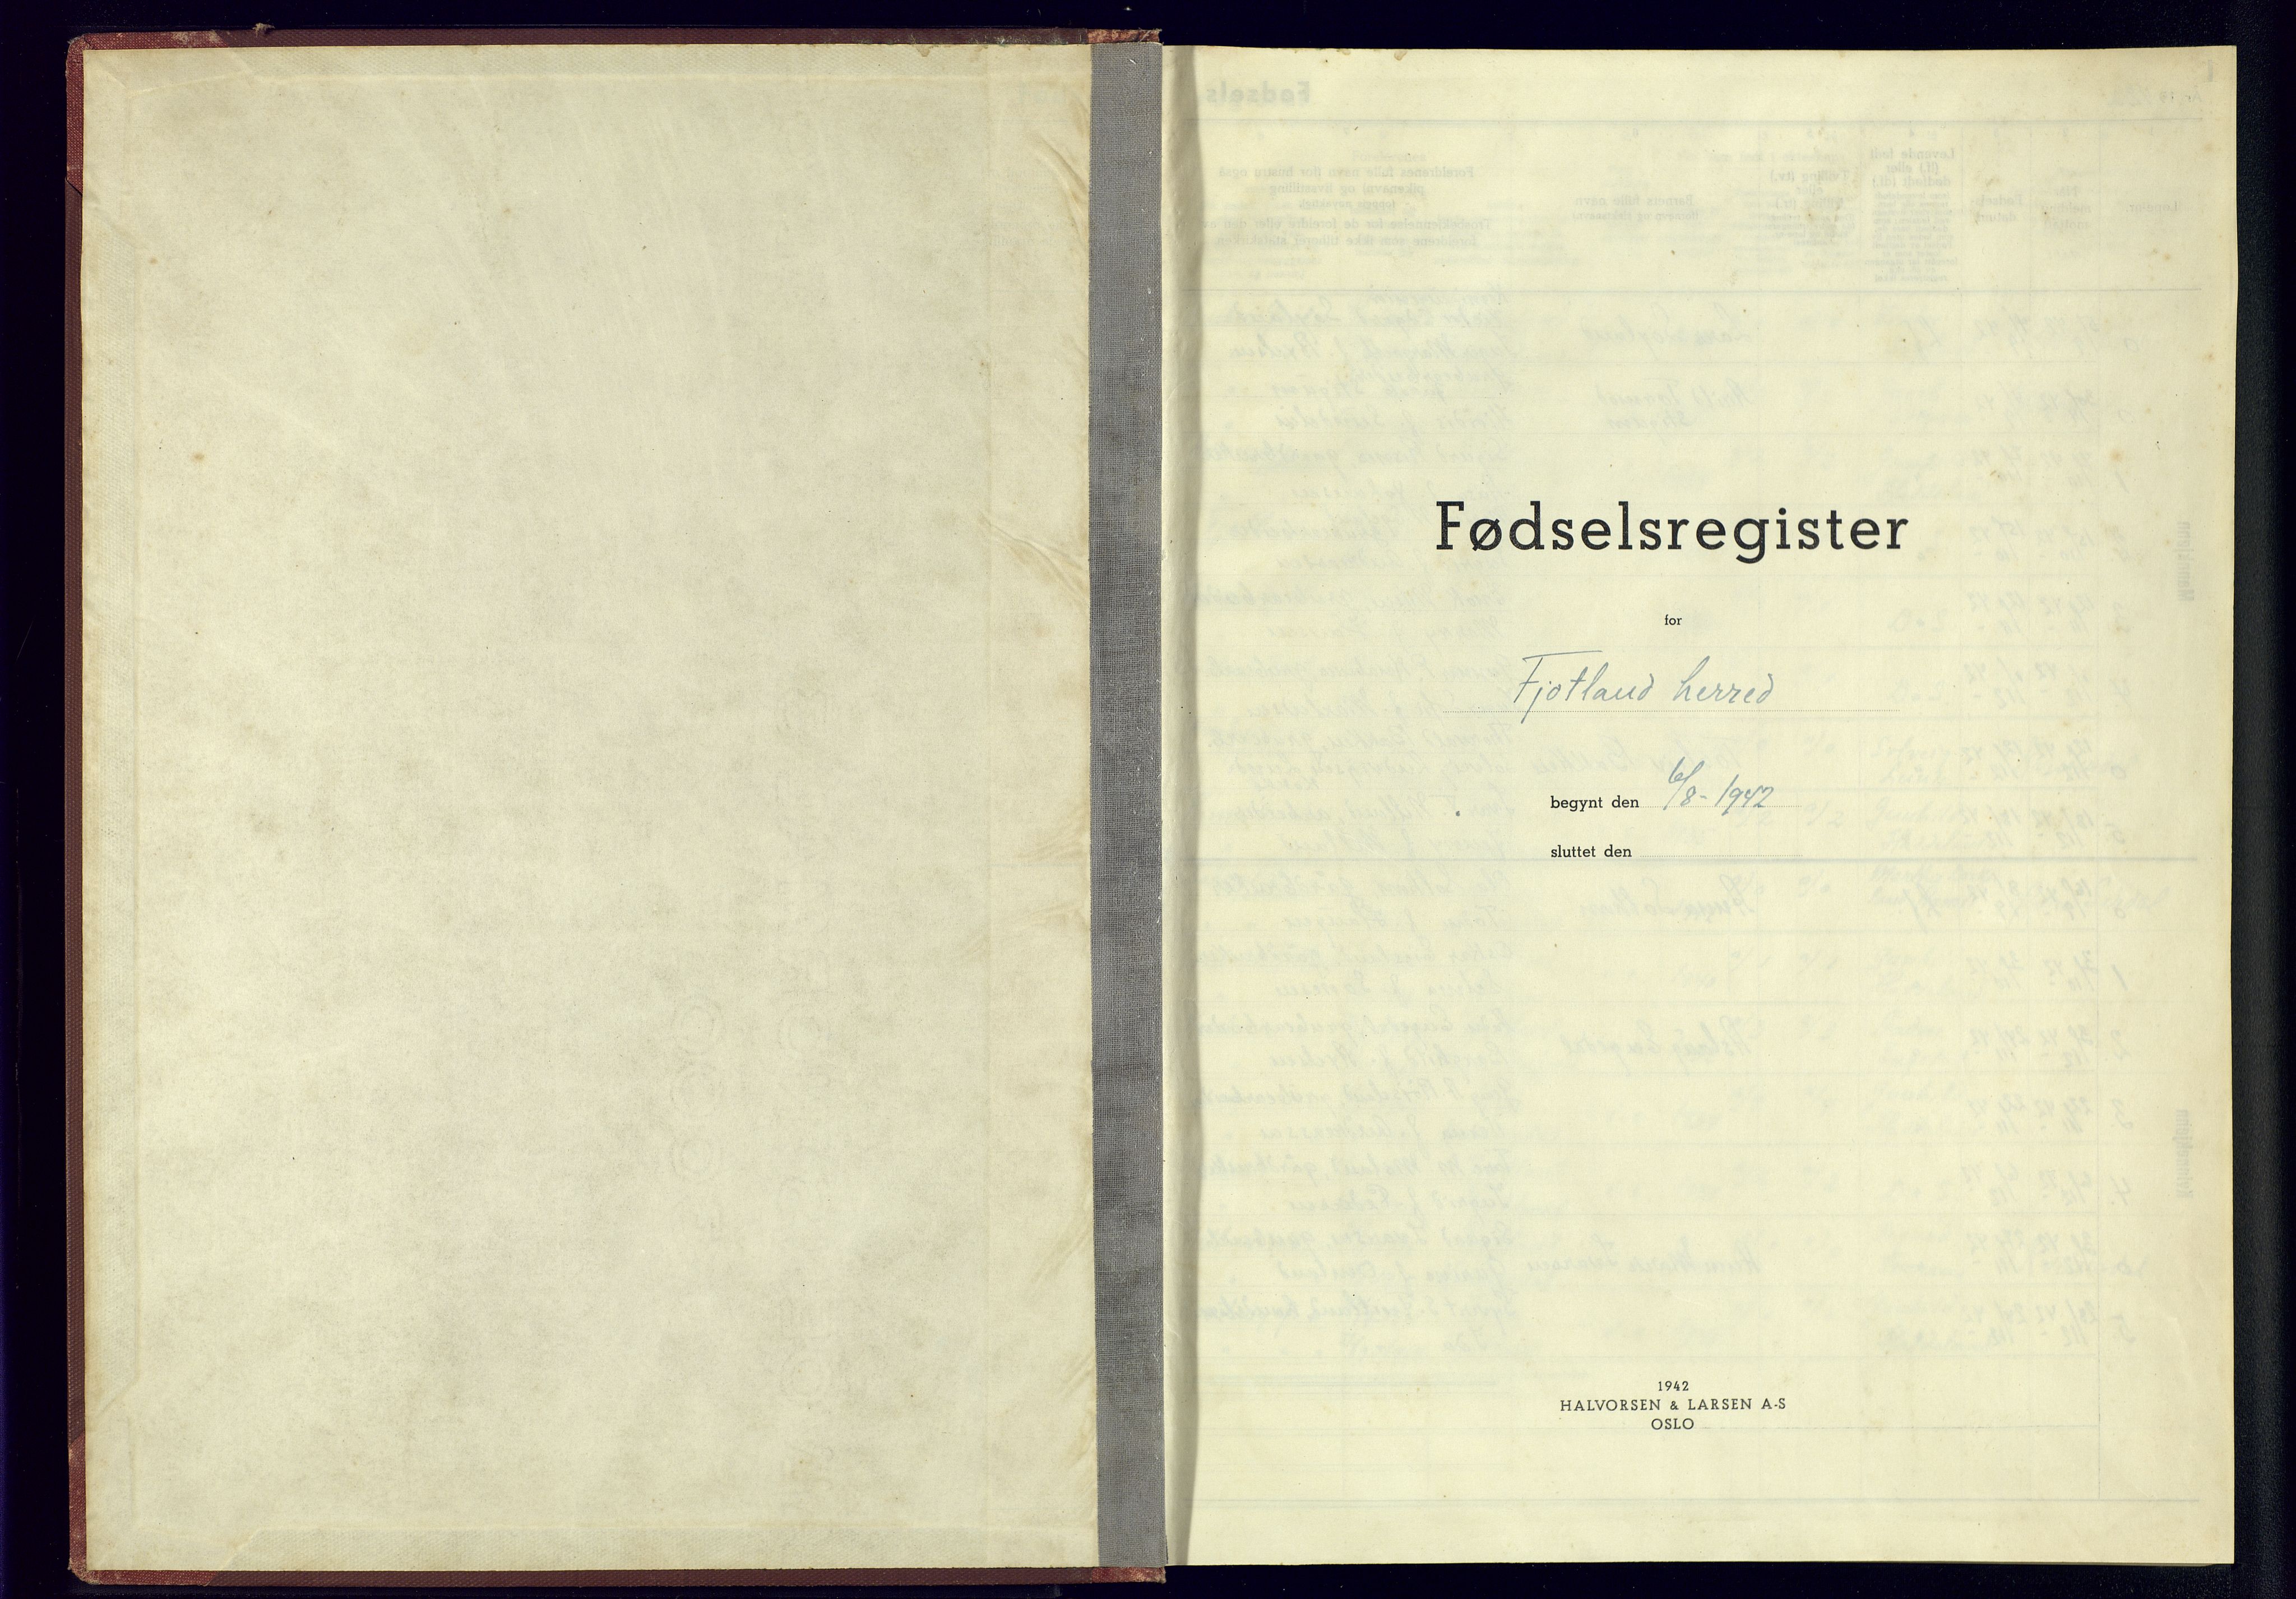 Fjotland sokneprestkontor, SAK/1111-0010/J/Jb/L0001: Fødselsregister nr. 1, 1942-1945